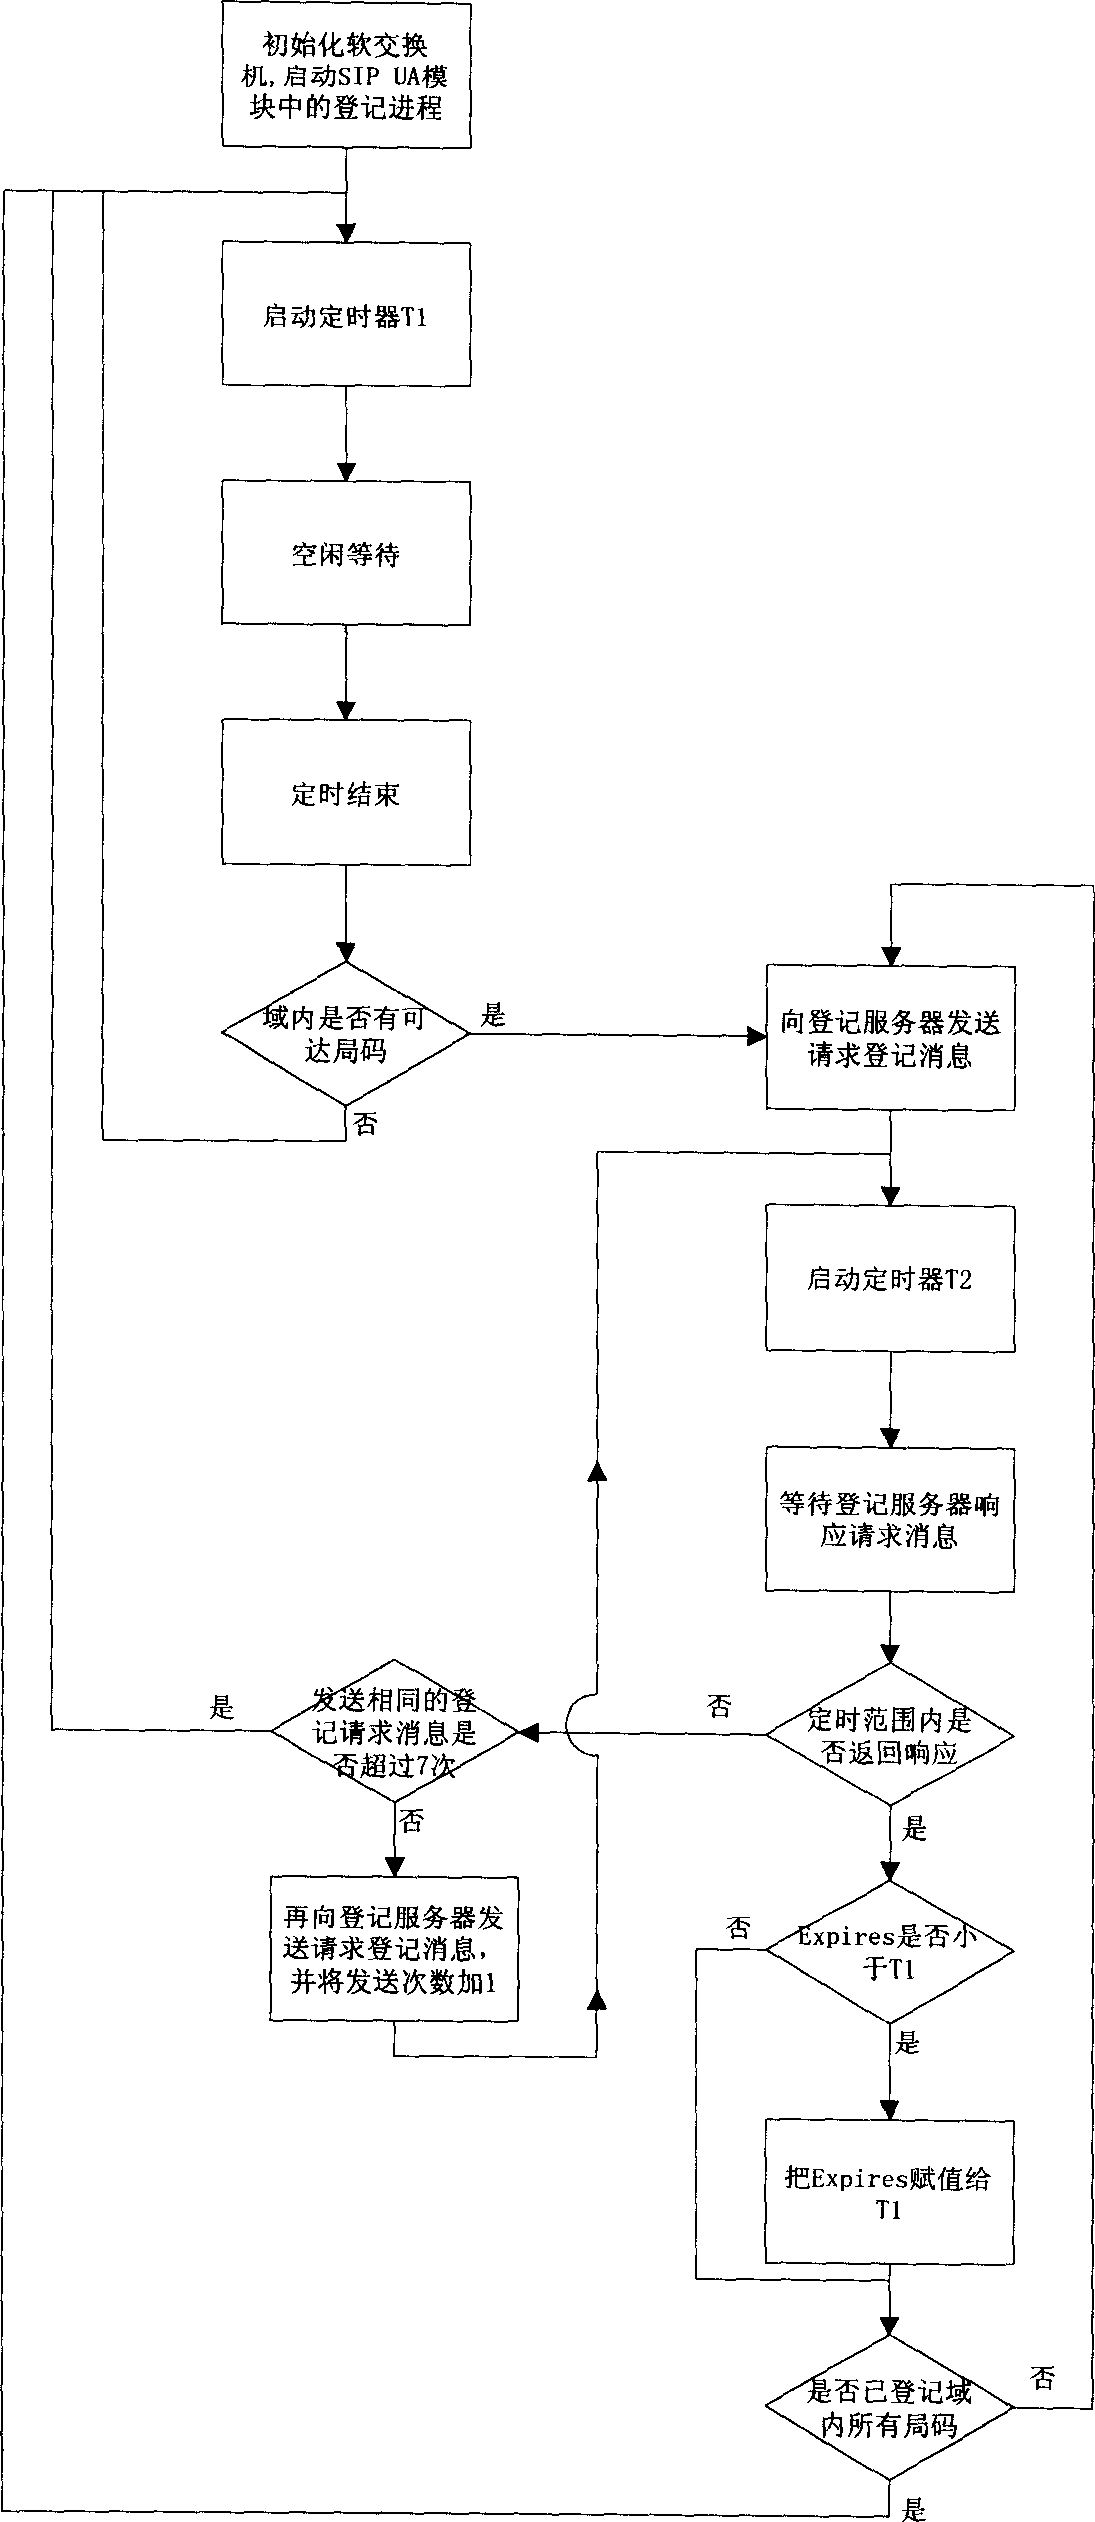 Registration method of flexible switchboard intra domain user